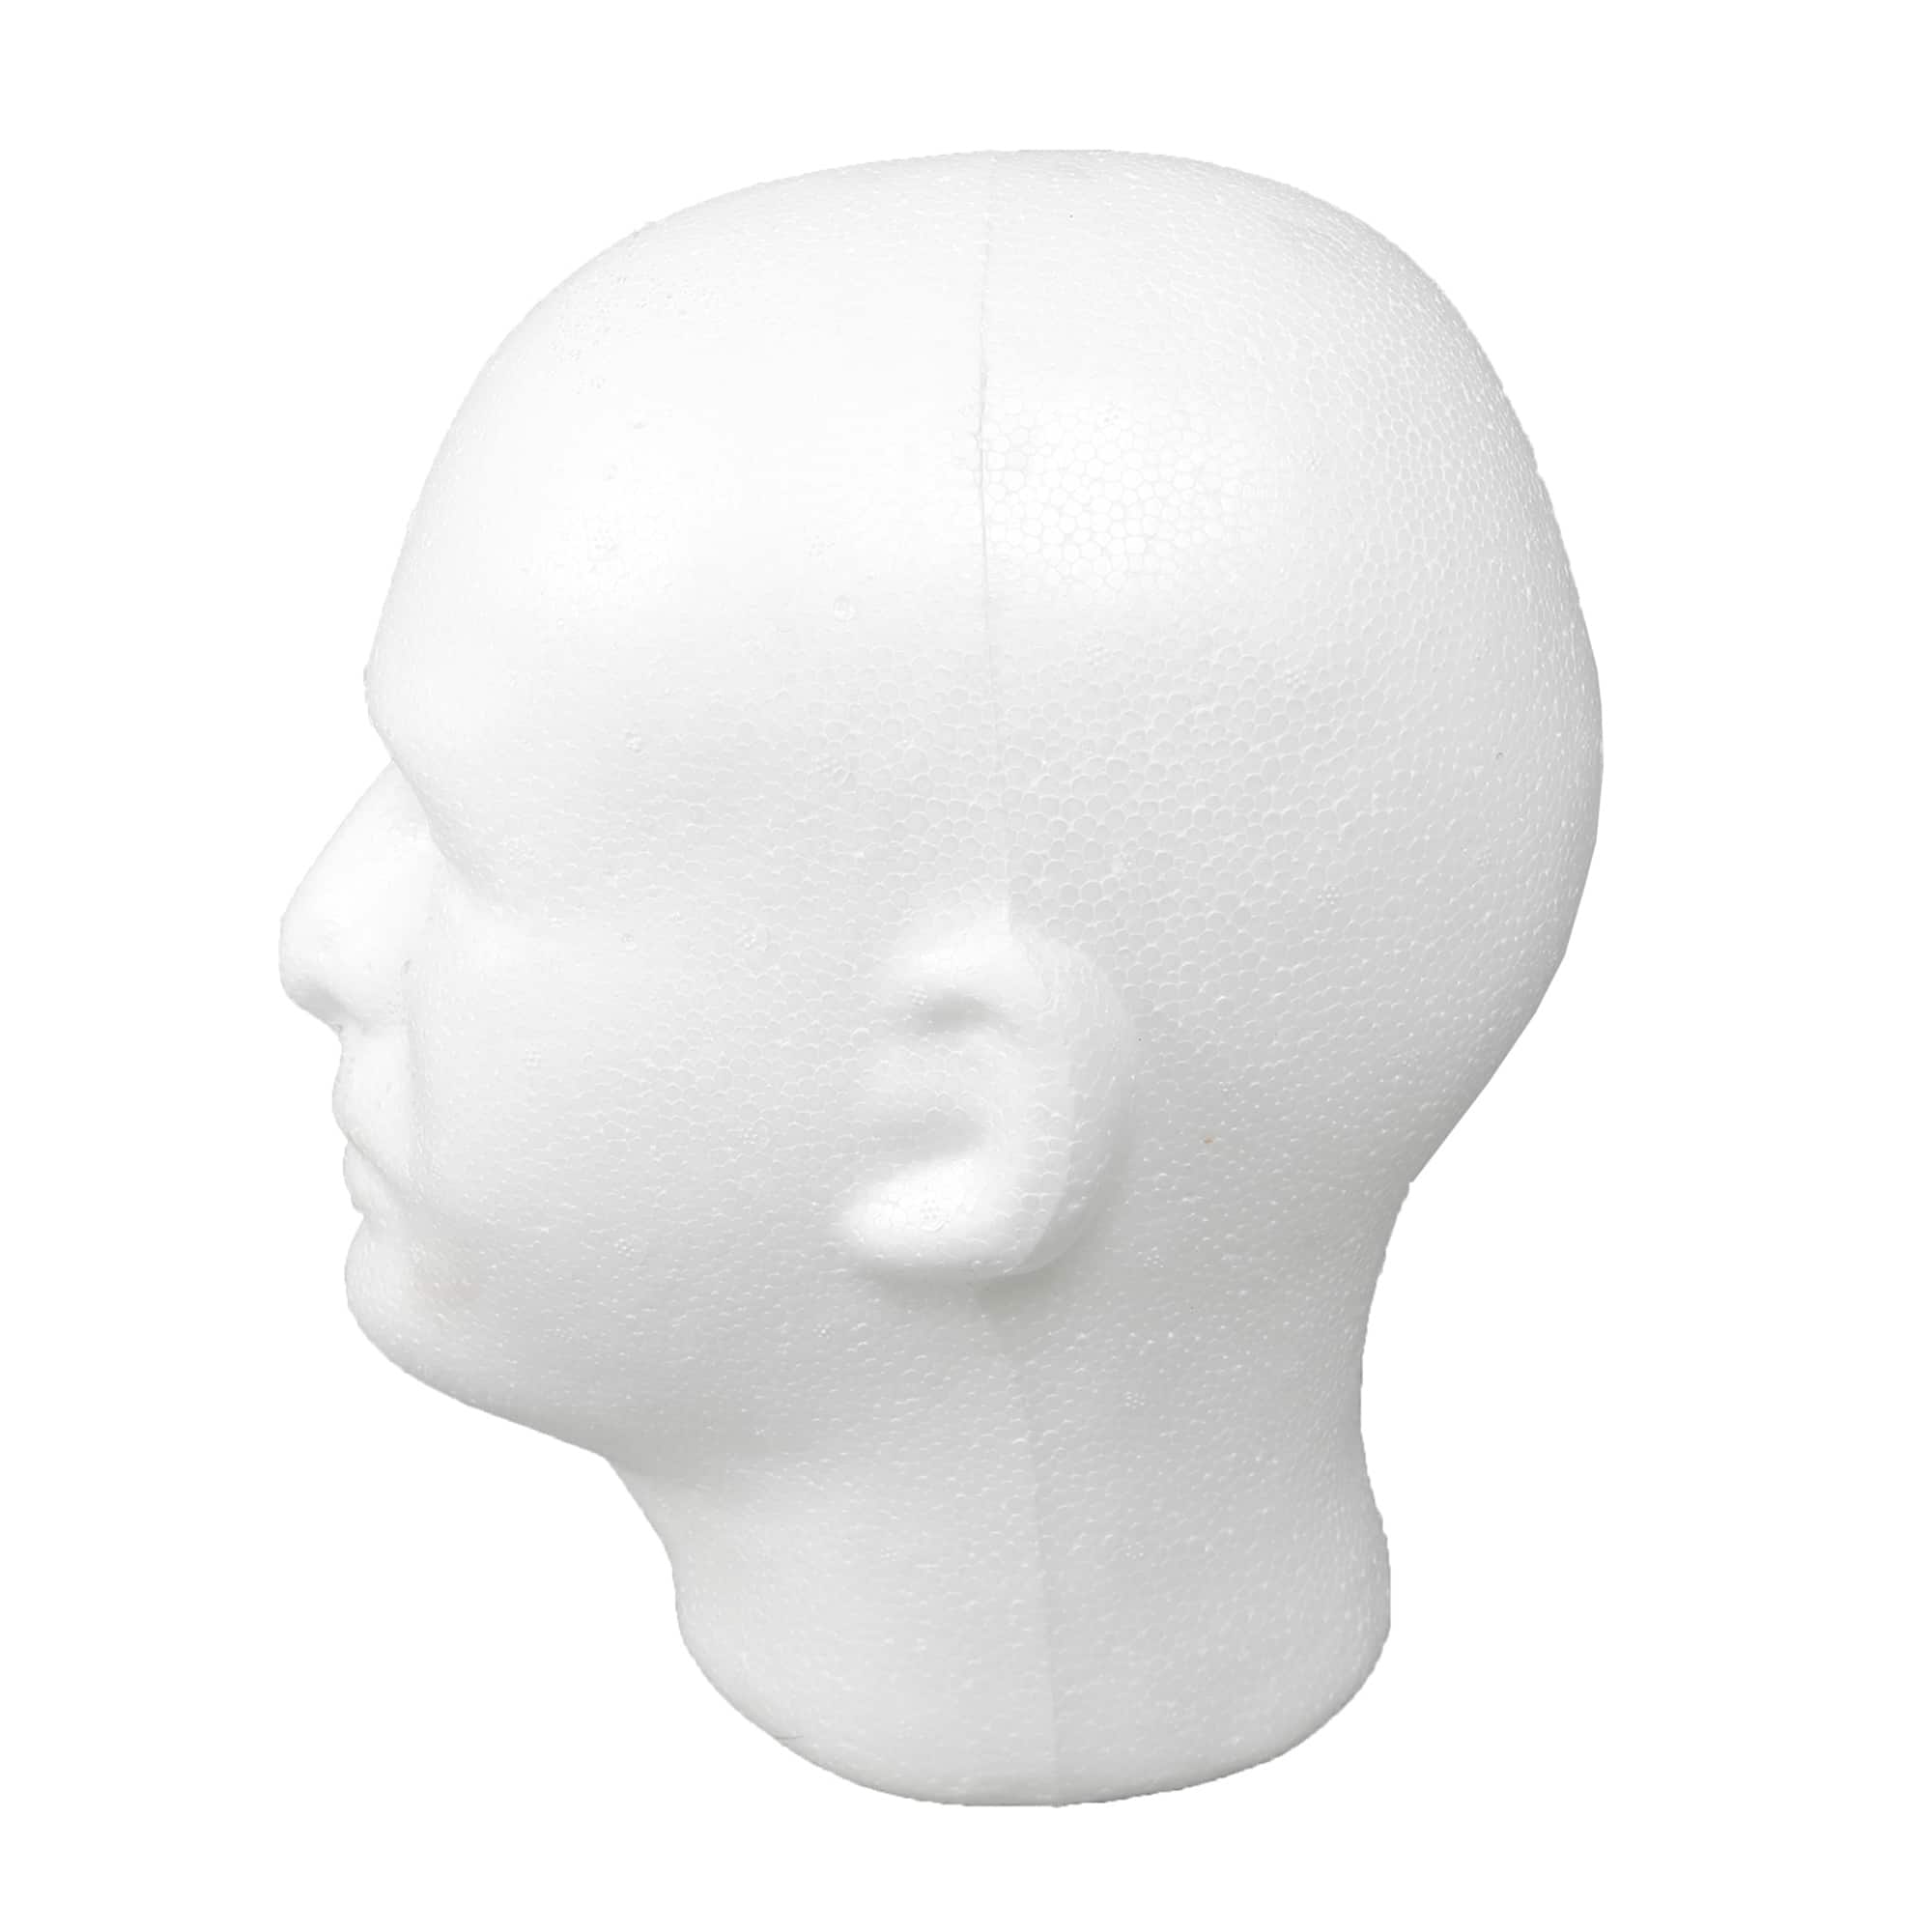 Male Styrofoam Mannequin Head